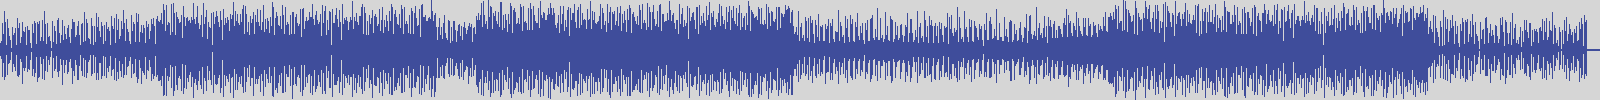 nf_boyz_records [NFY078] Subway Soul - QR Code [Deepfully Mix] audio wave form